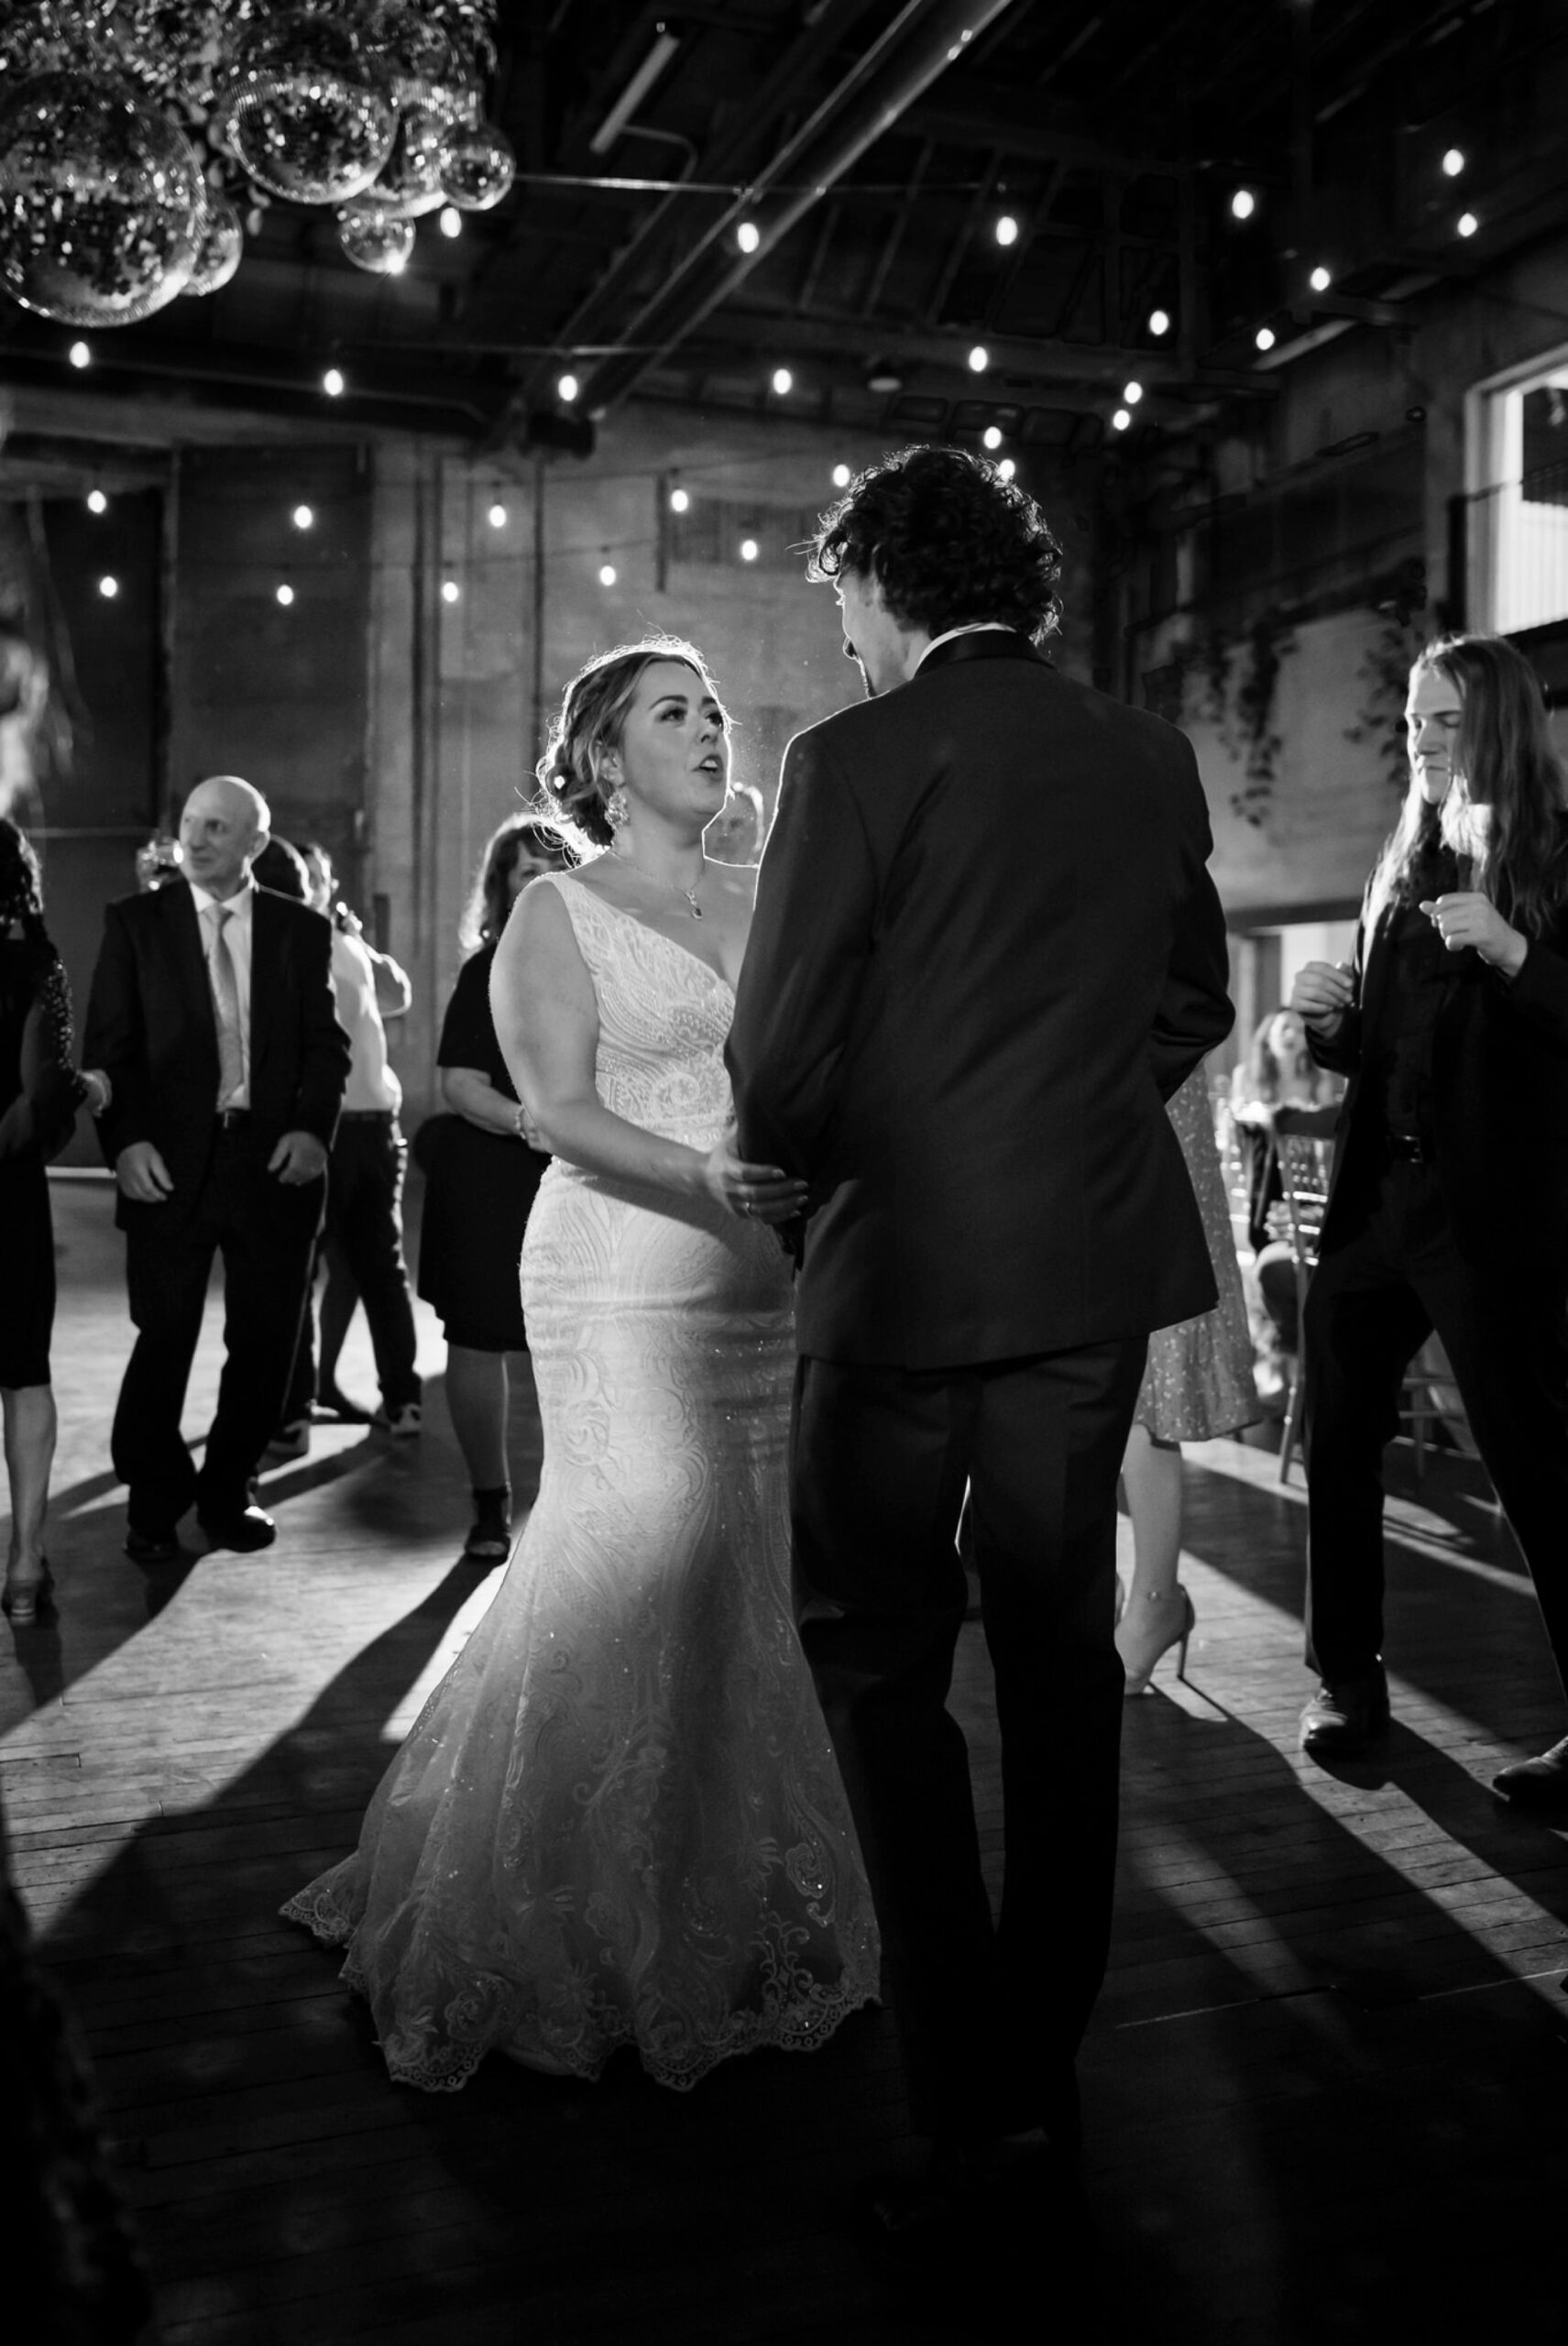 A bride and groom dance on their open dance floor during their Jam Handy wedding.  